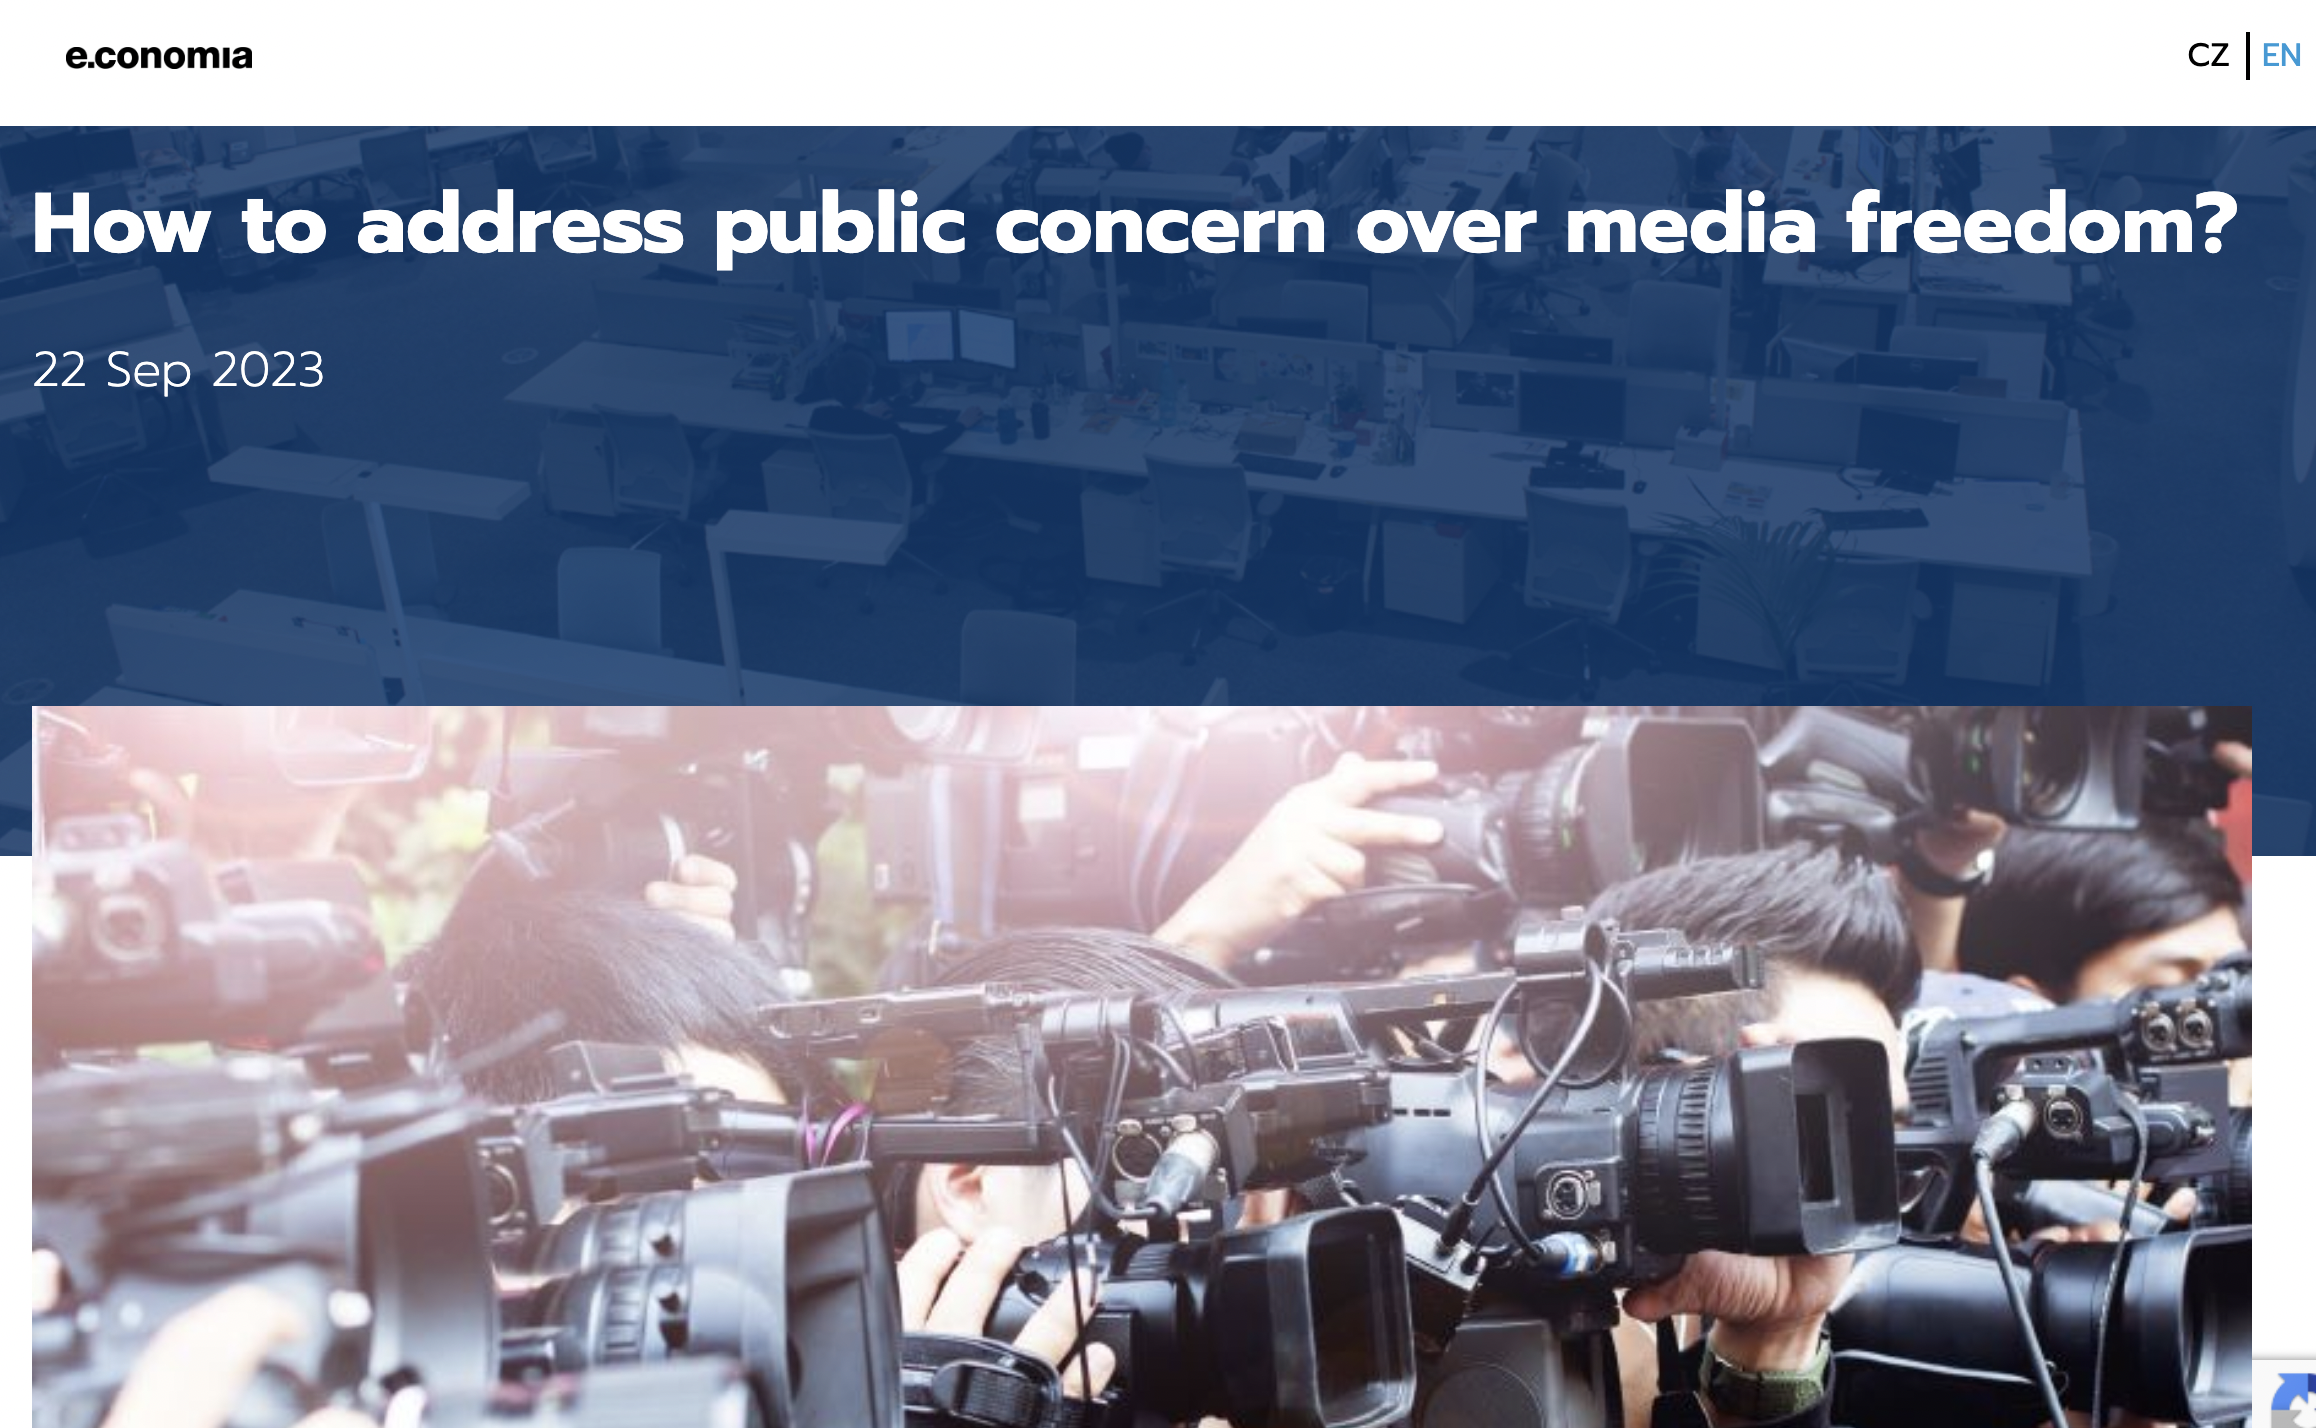 Adressing public concern over media freedom